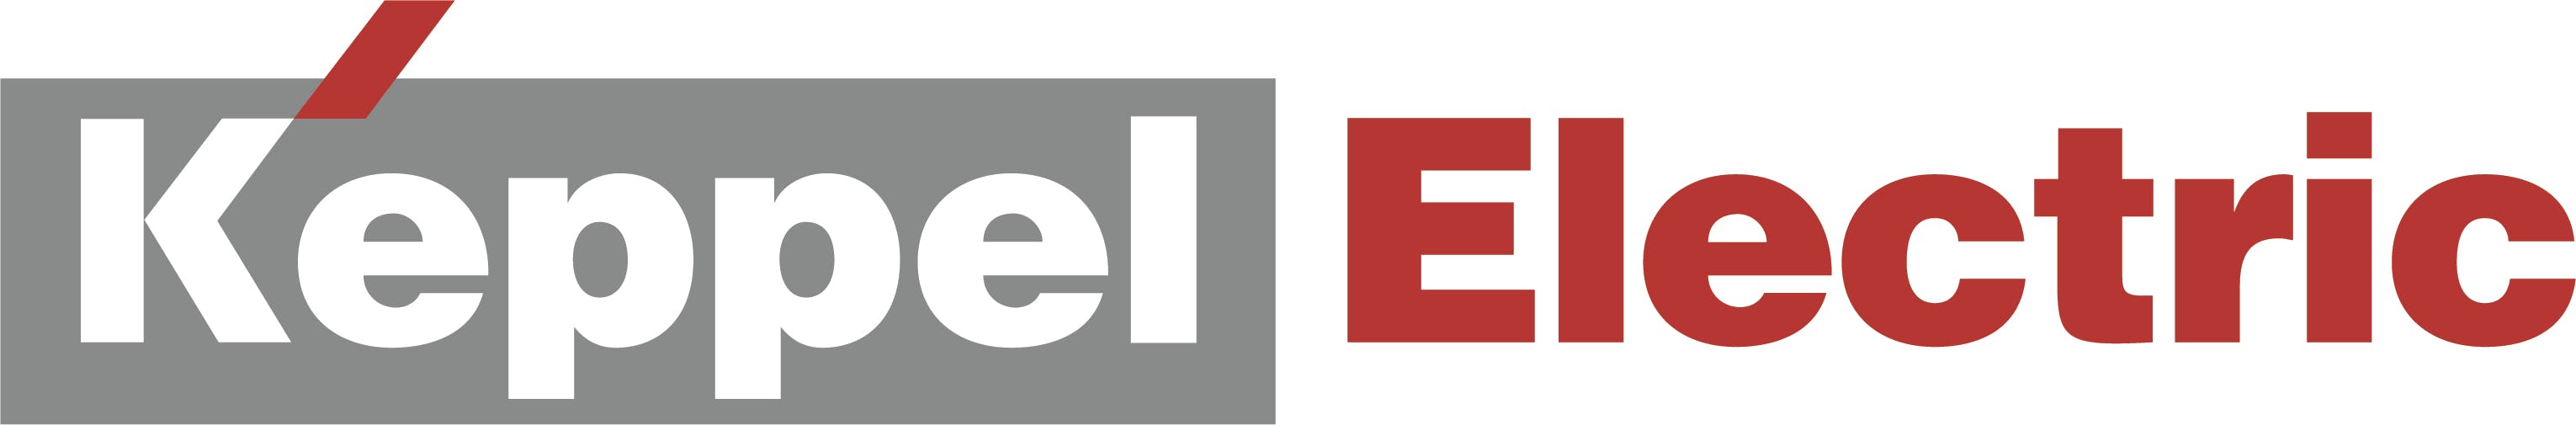 Keppel Electric Logo